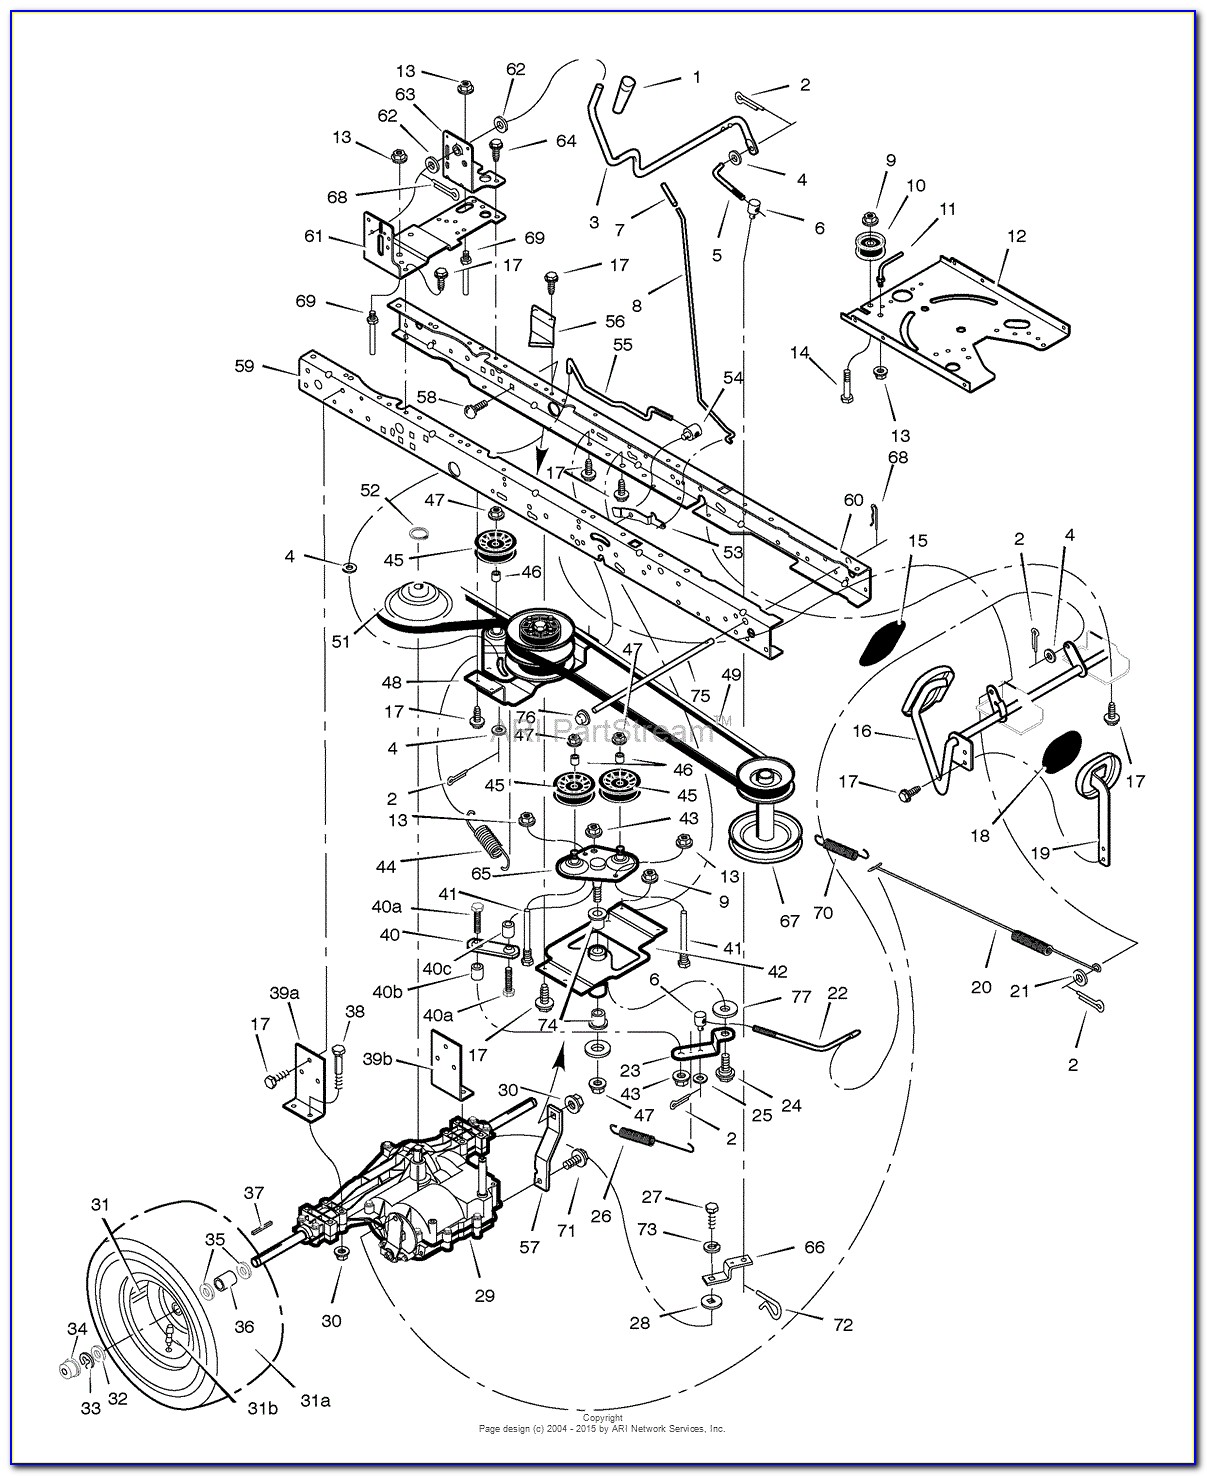 2003 Crown Victoria Wiring Diagram Manual